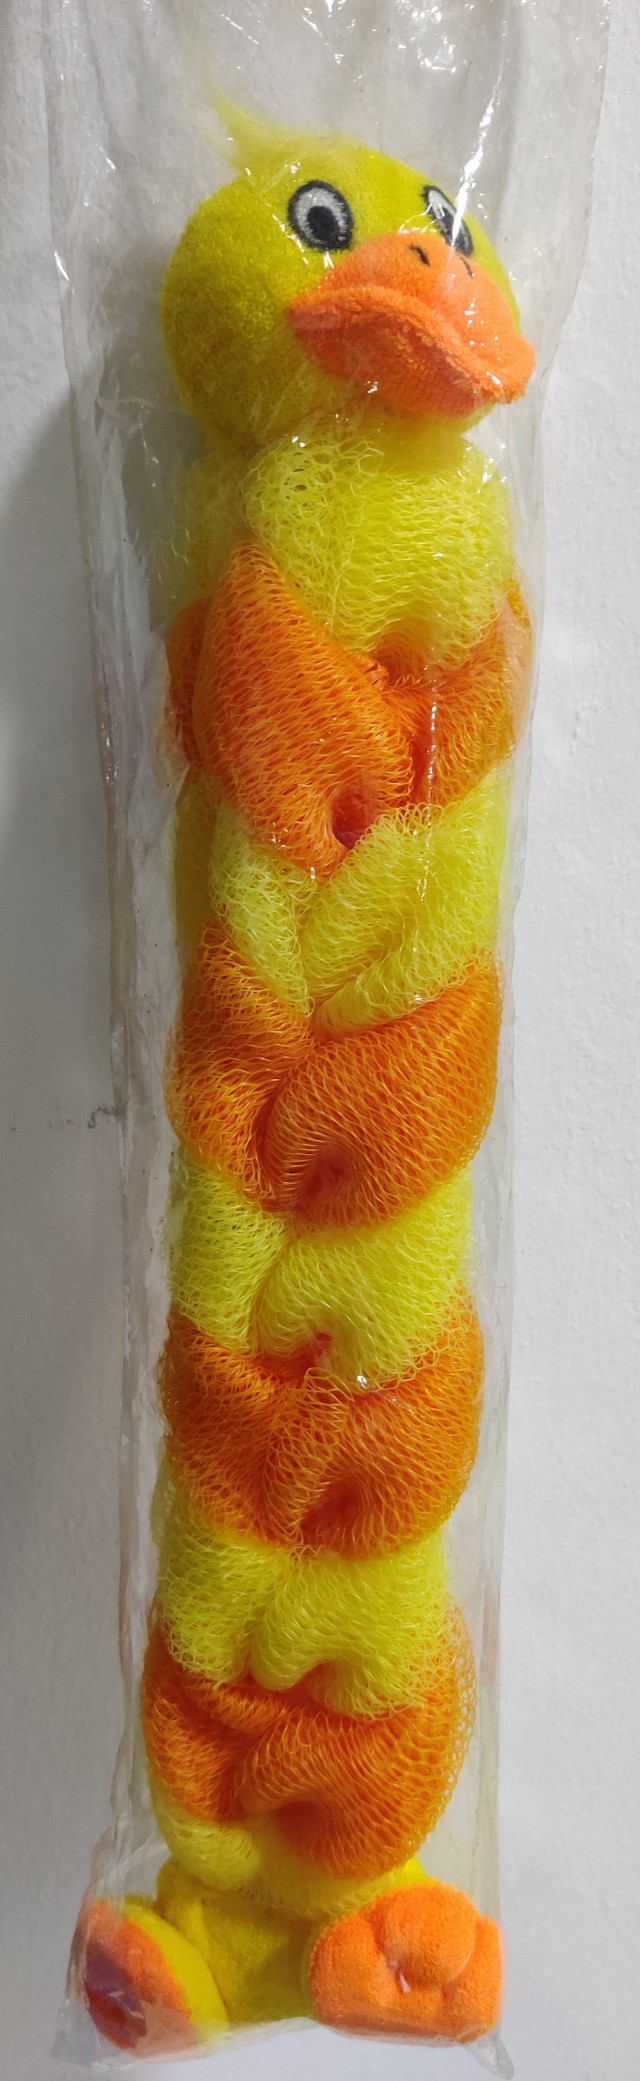 Medisei Σφουγγάρι Μπάνιου Χρώμα Πορτοκαλί, 1τμχ